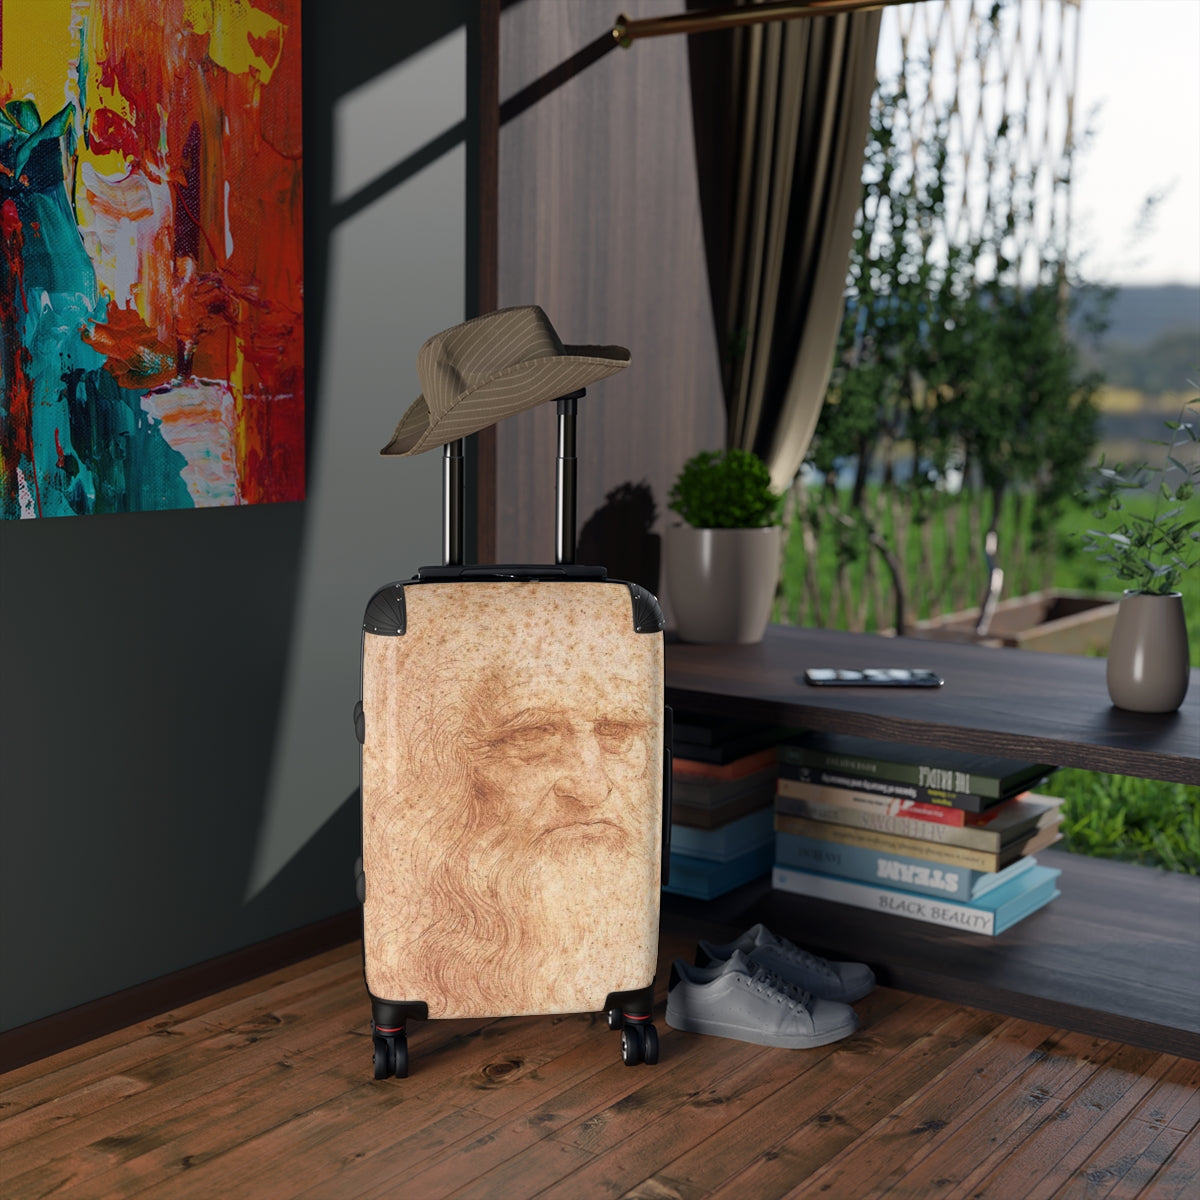 Getrott Portrait of a Man in Red Chalk by Leonardo Da Vinci Black Cabin Suitcase Extended Storage Adjustable Telescopic Handle Double wheeled Polycarbonate Hard-shell Built-in Lock-Bags-Geotrott